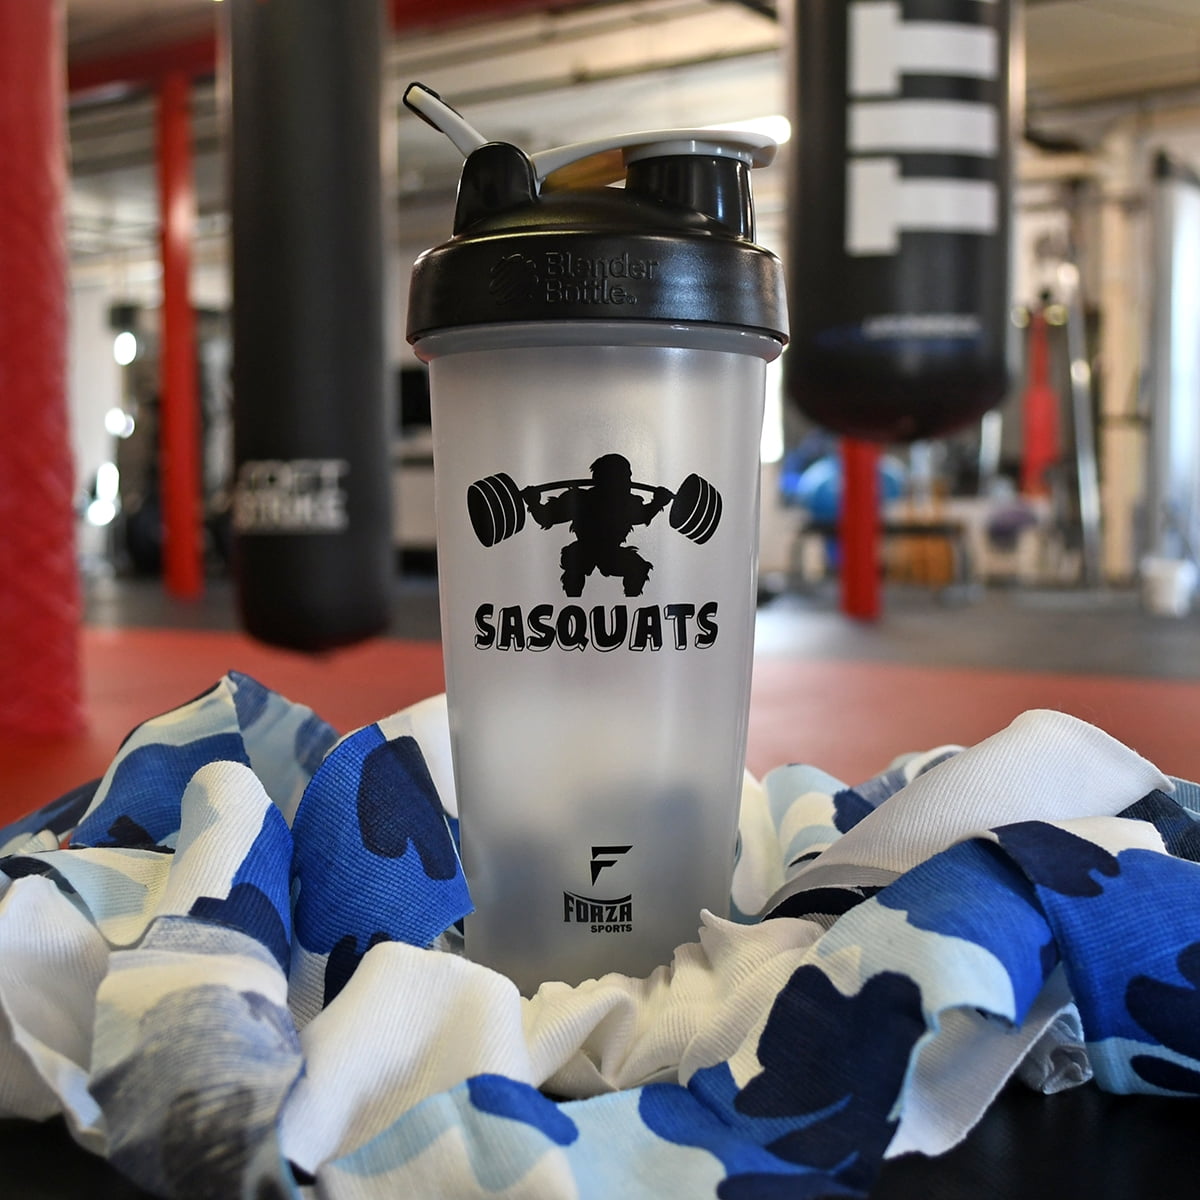 Protein Shaker Bottle 24oz (710ml) Gym CrossFit Workout Sports Lot